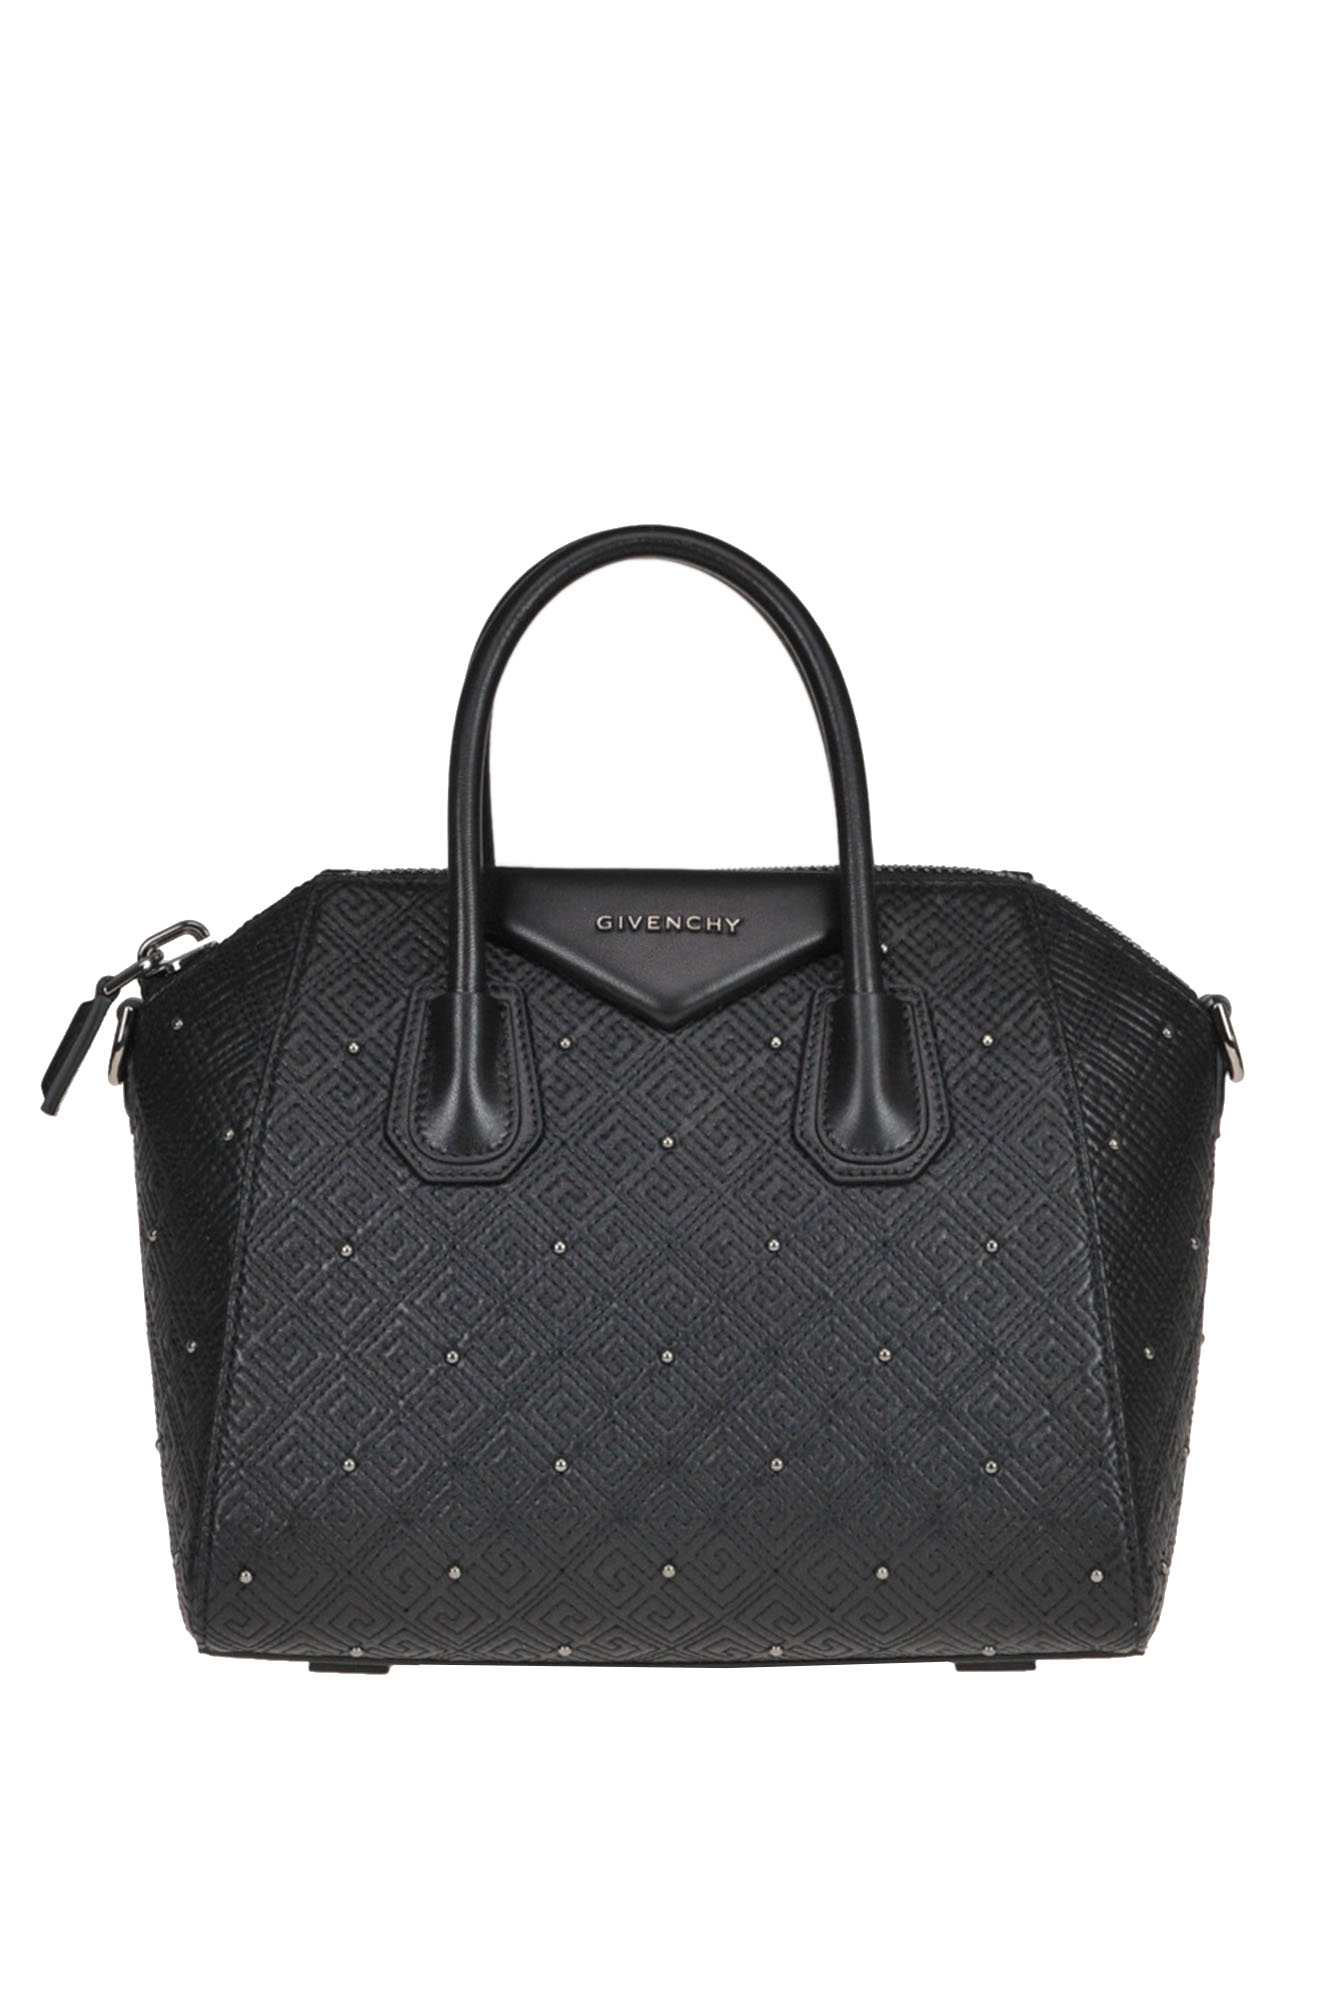 Givenchy Embellished Antigona Leather Bag In Black